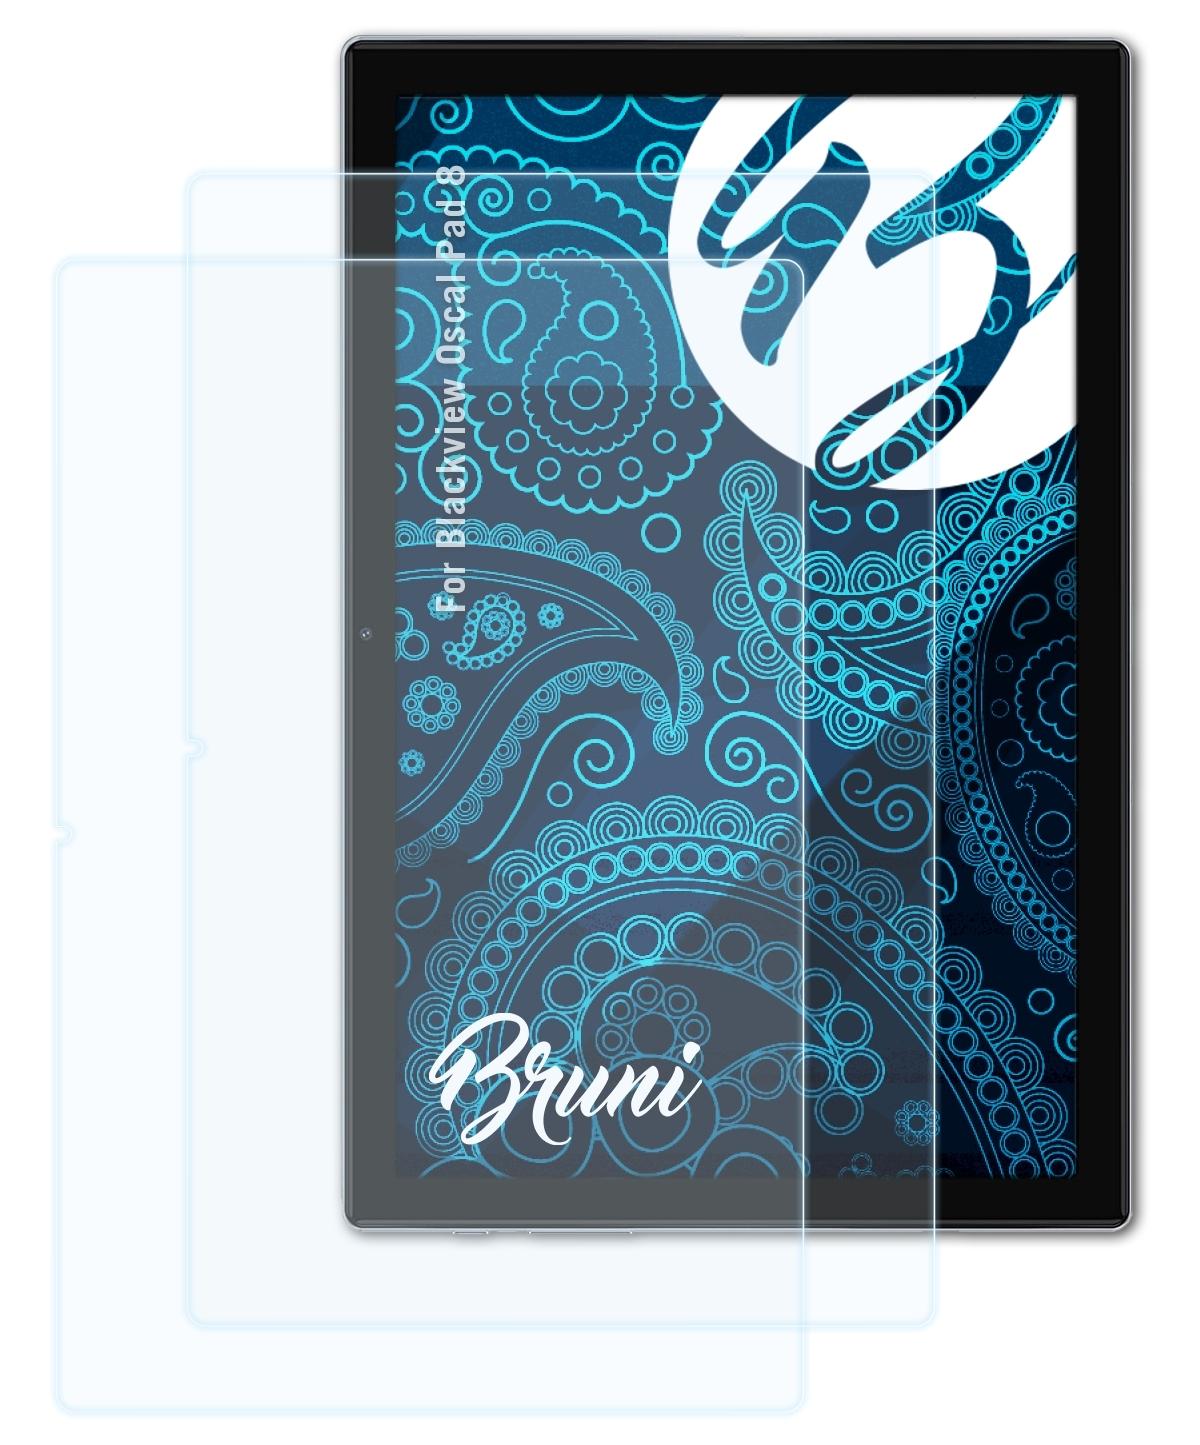 BRUNI 2x Oscal 8) Basics-Clear Schutzfolie(für Blackview Pad